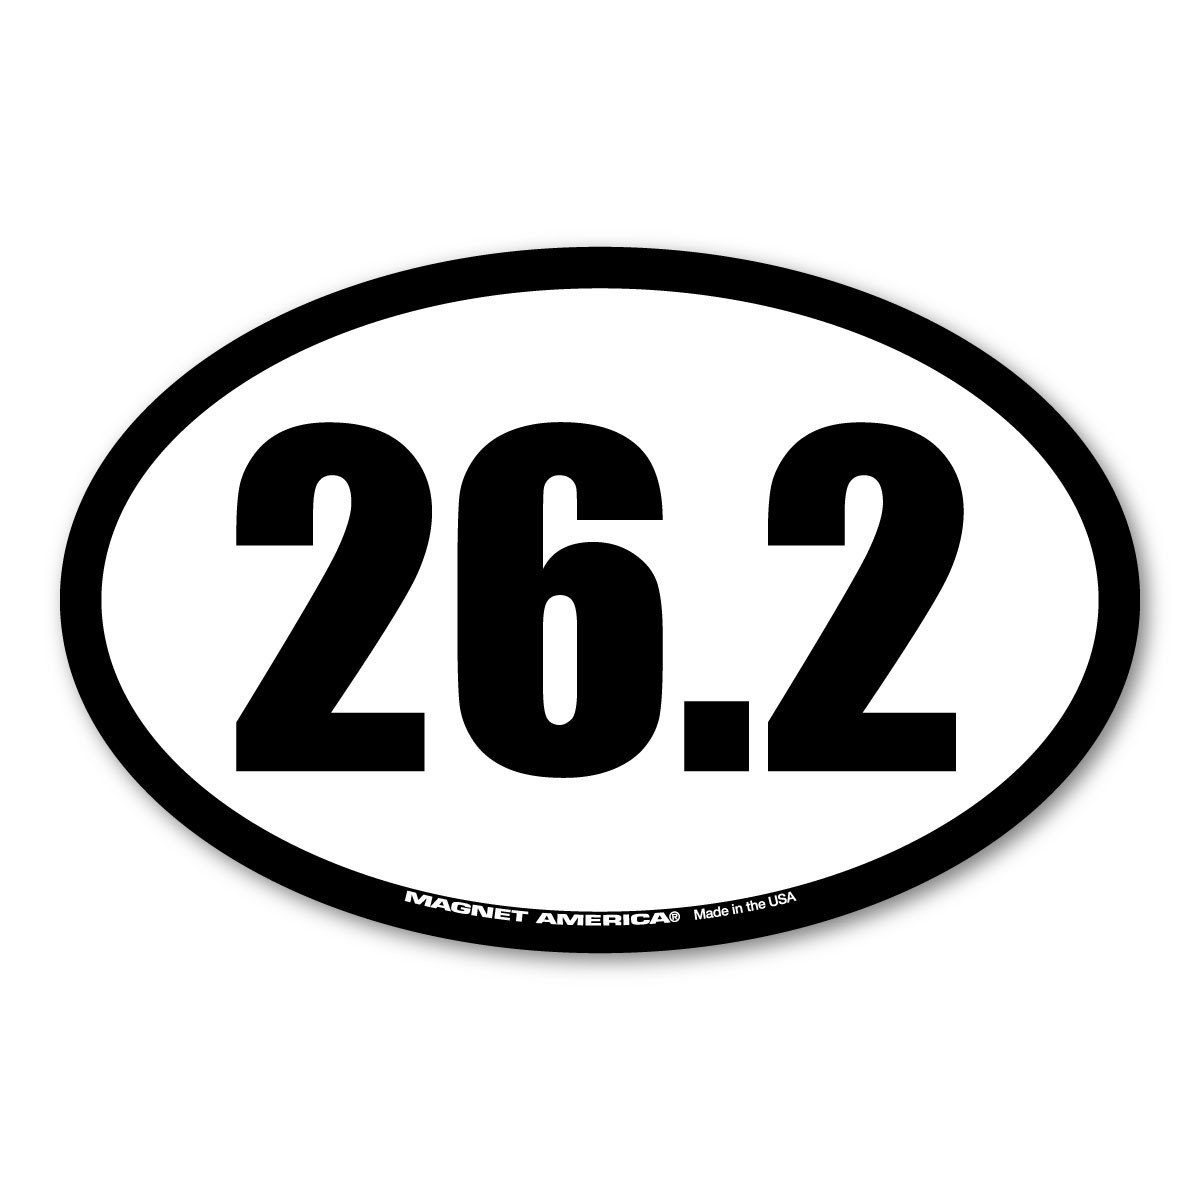 26.7 Oval Bumper Sticker or Helmet Sticker D446 Euro Oval Marathon 26.2 Race 